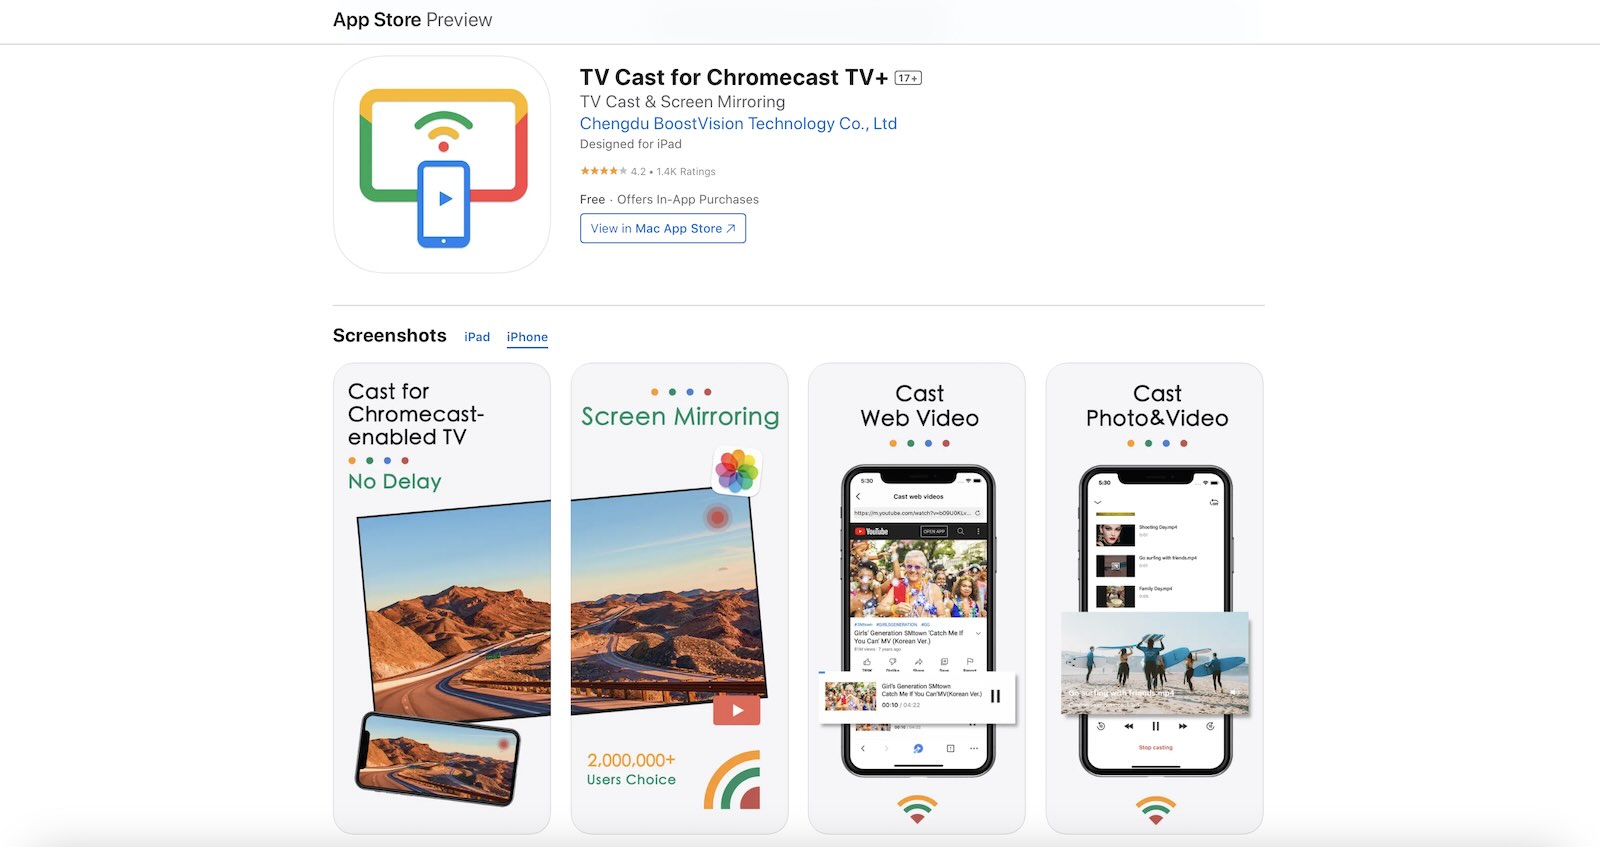 TV Cast for Chromecast TV+ in the App Store